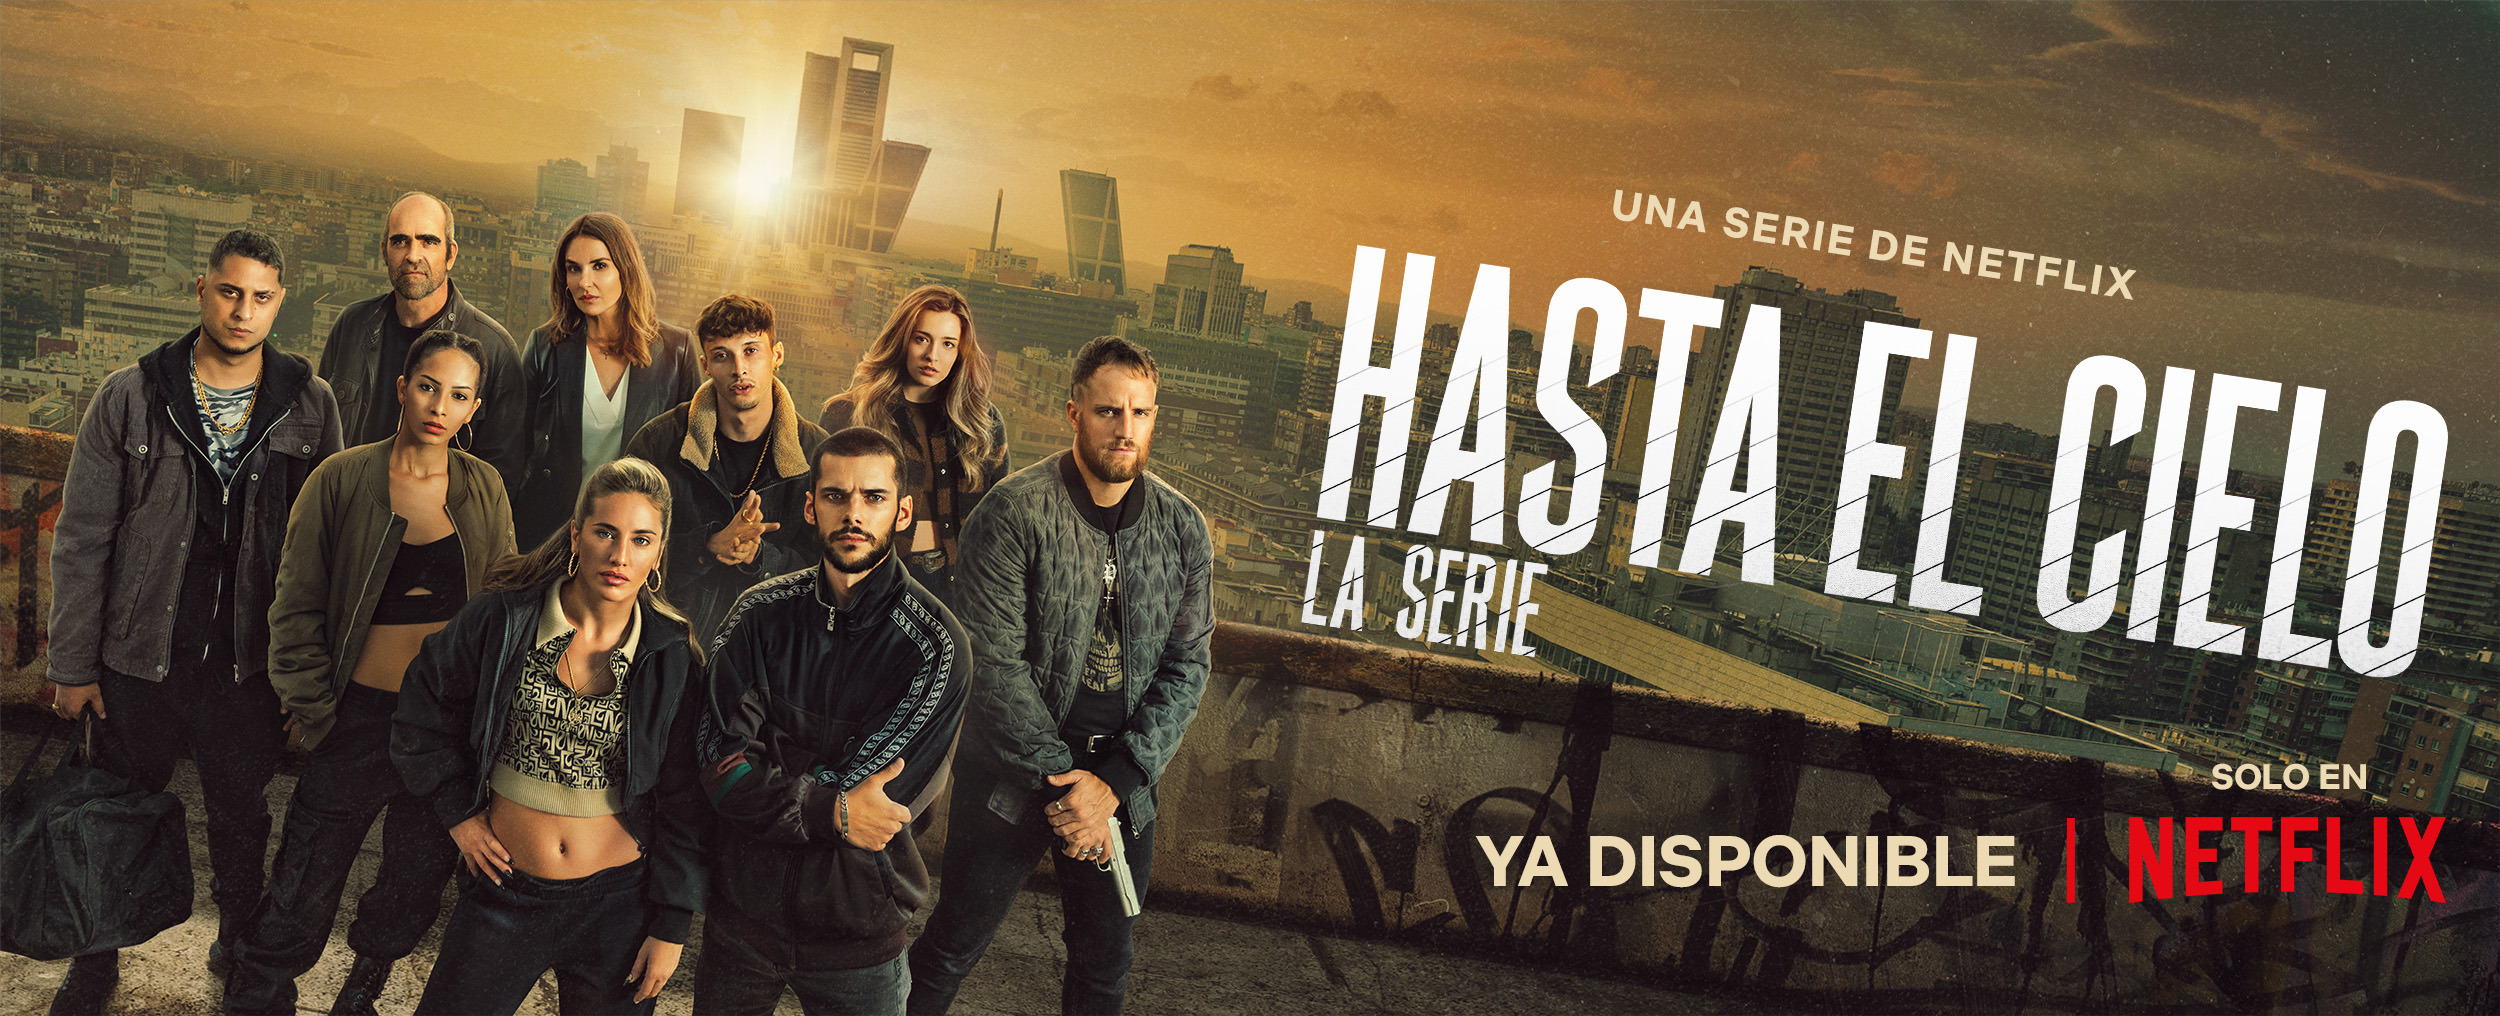 Mega Sized TV Poster Image for Hasta el cielo: La serie (#2 of 7)